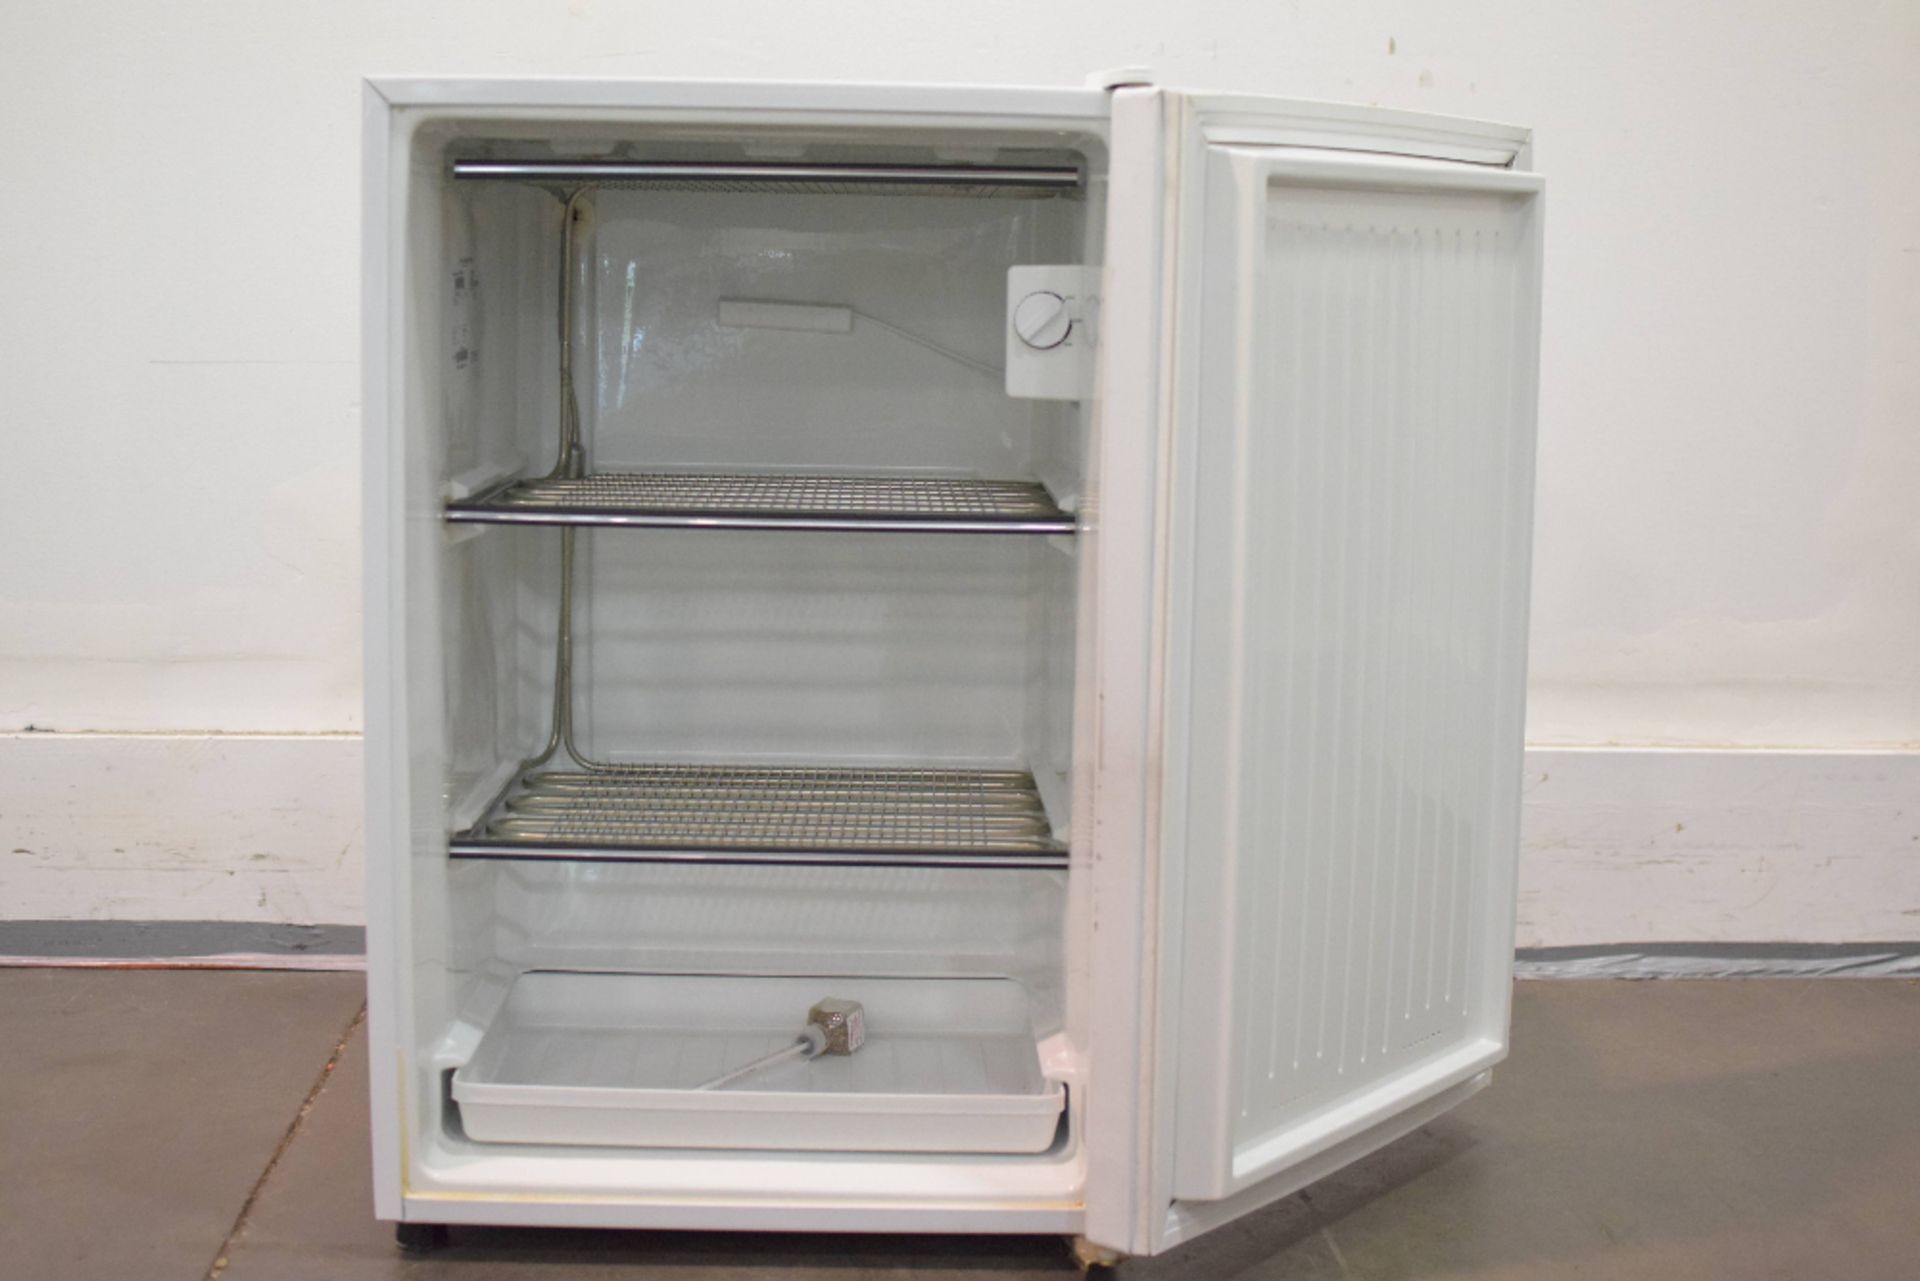 Kendro Labs VWR U2005GA14 UC Refrigerator - Image 2 of 2